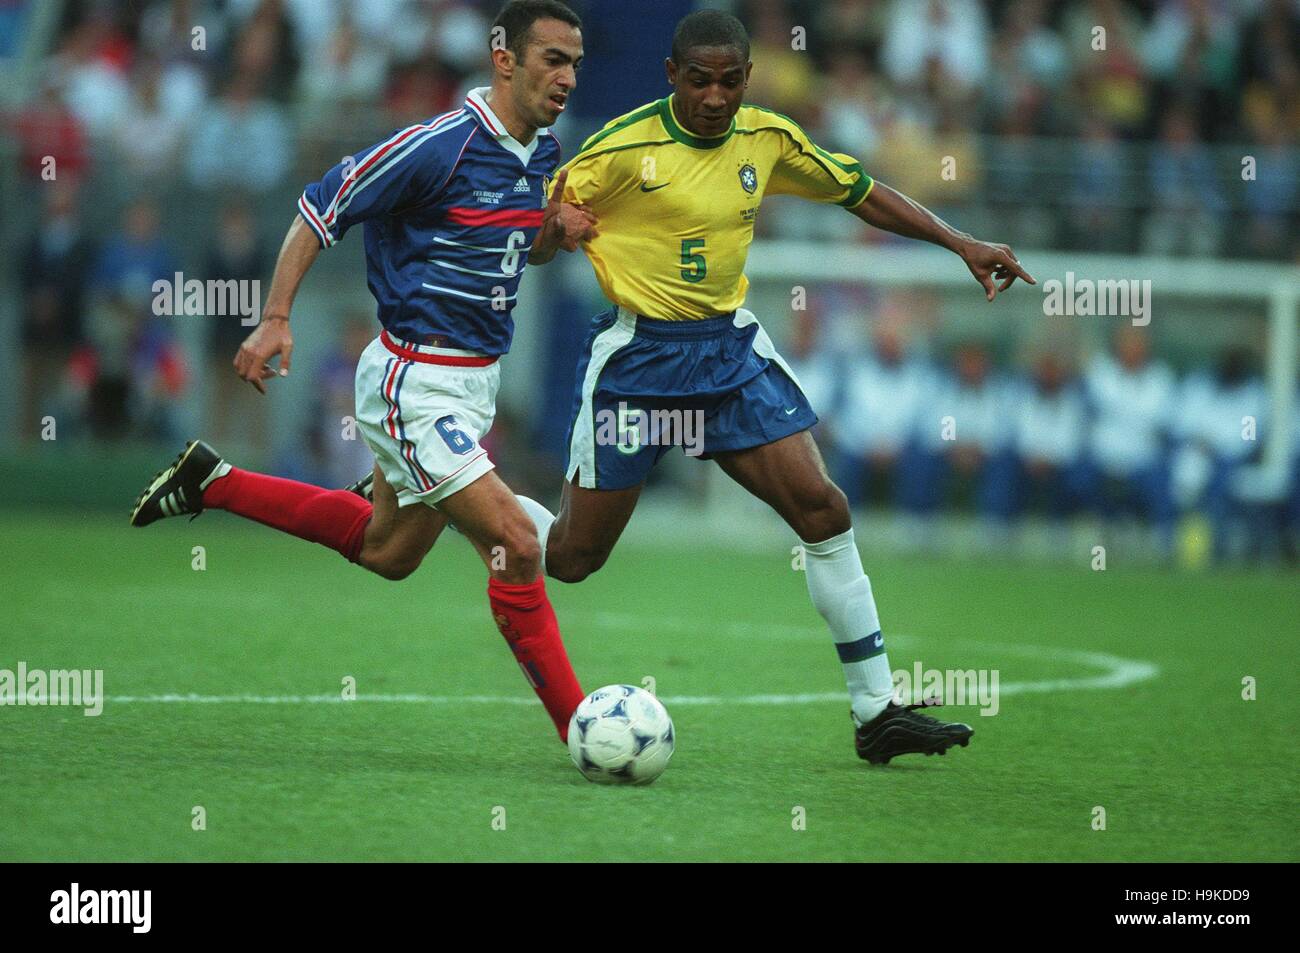 DJORKAEFF & CESAR SAMPAIO BRAZIL V FRANCE 12 July 1998 Stock Photo